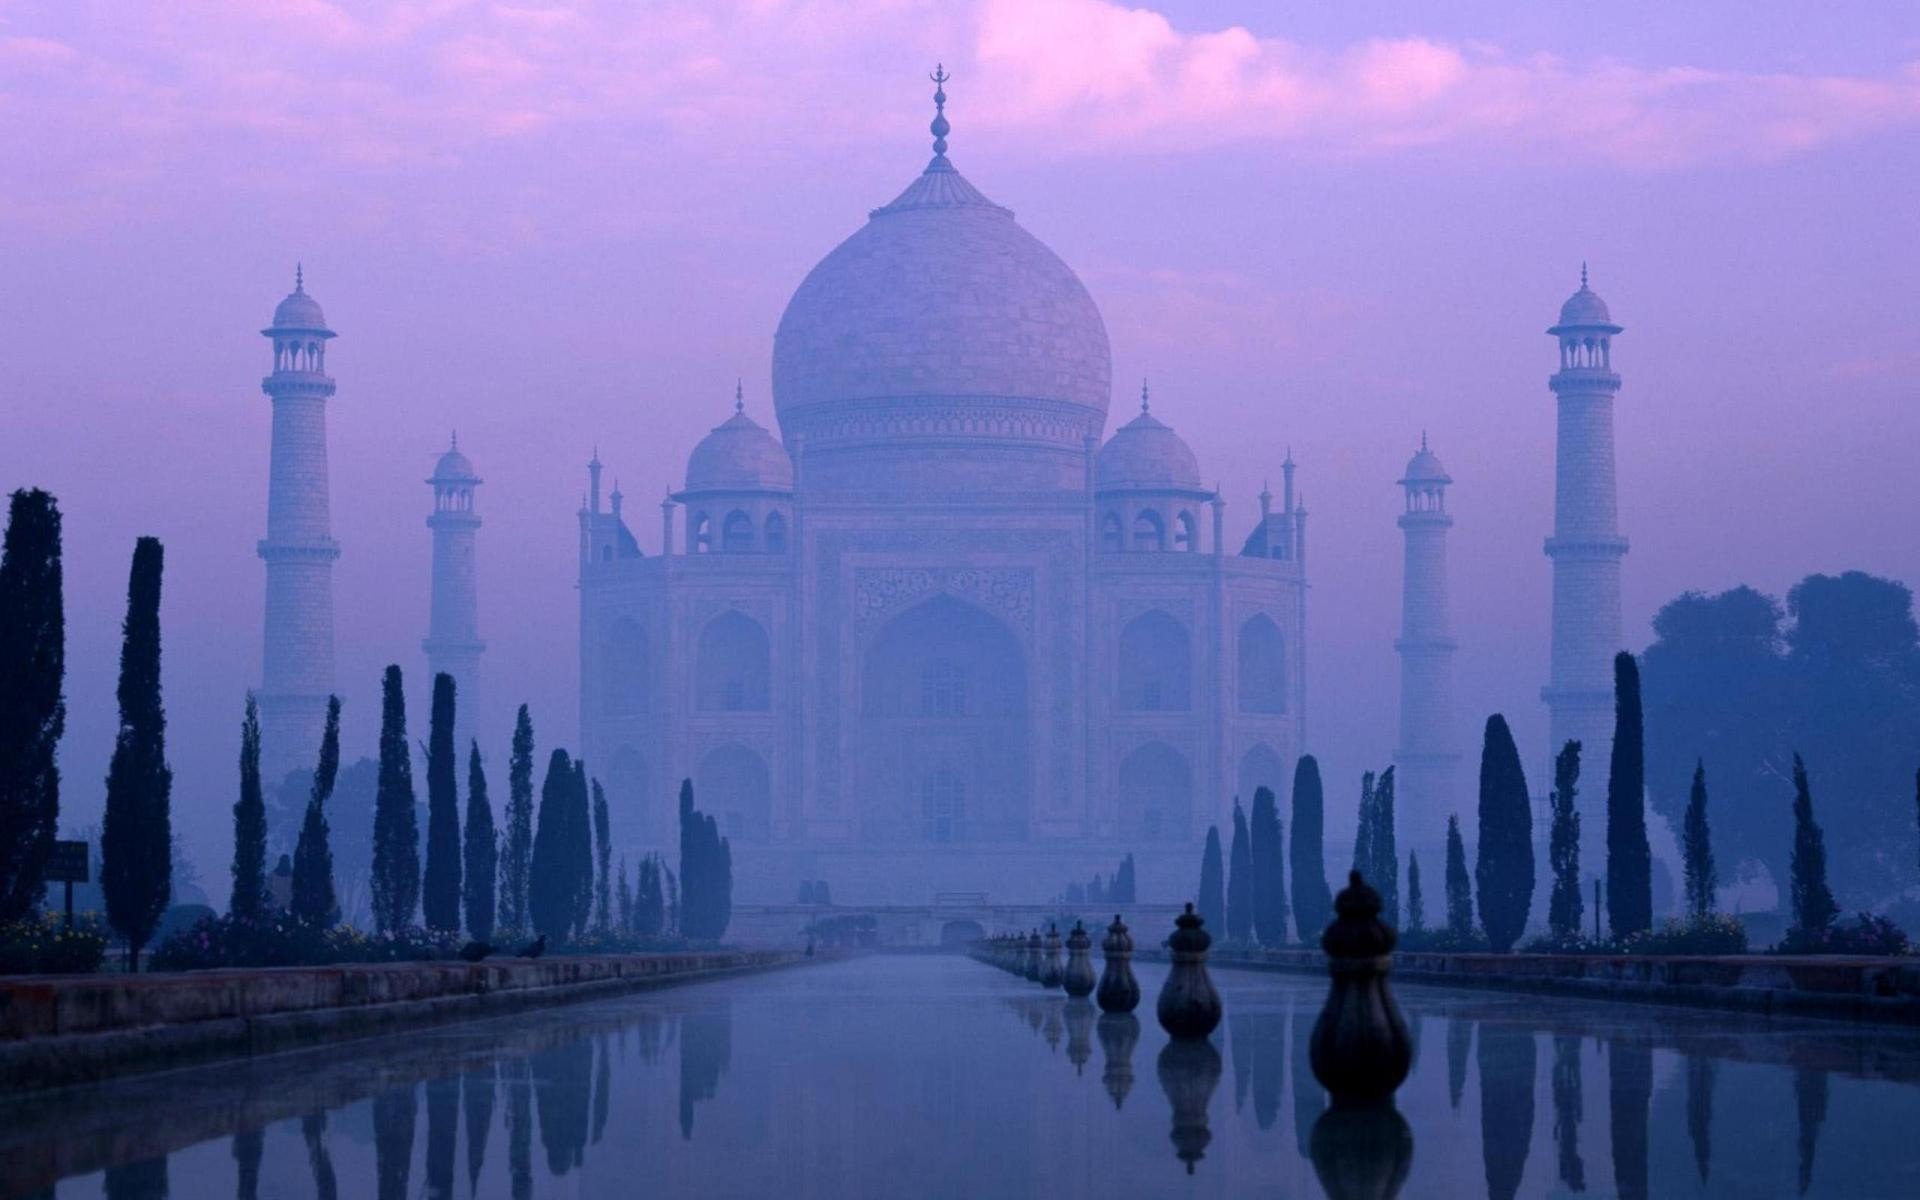 India Taj Mahal Wallpapers Hd Desktop And Mobile Backgrounds 3763